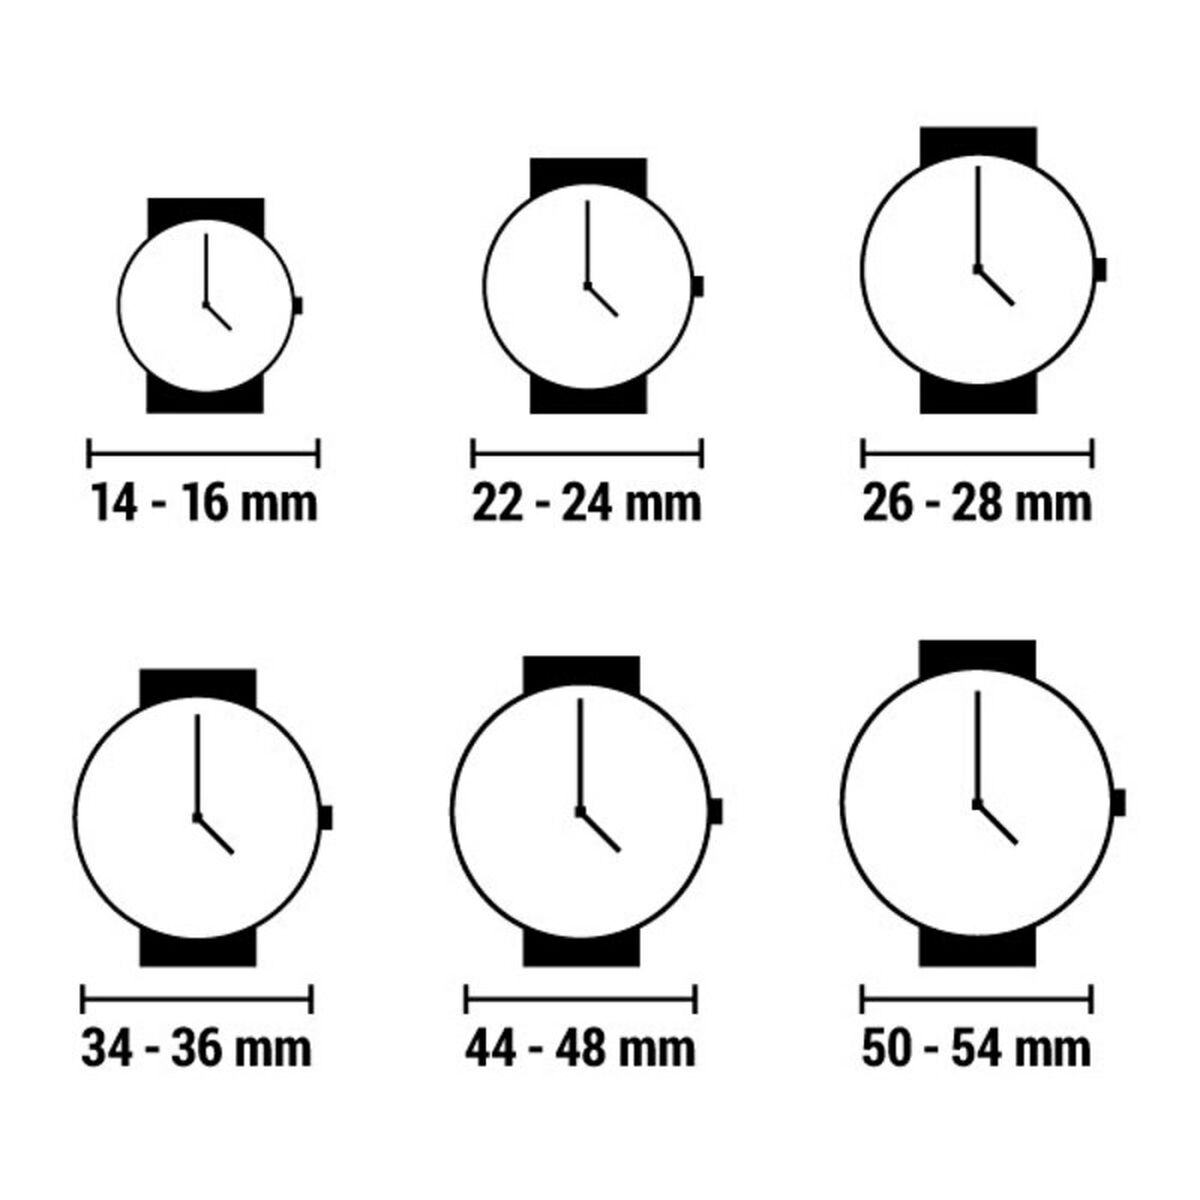 Horloge Dames Laura Biagiotti LB0020L-05Z (Ø 22 mm)